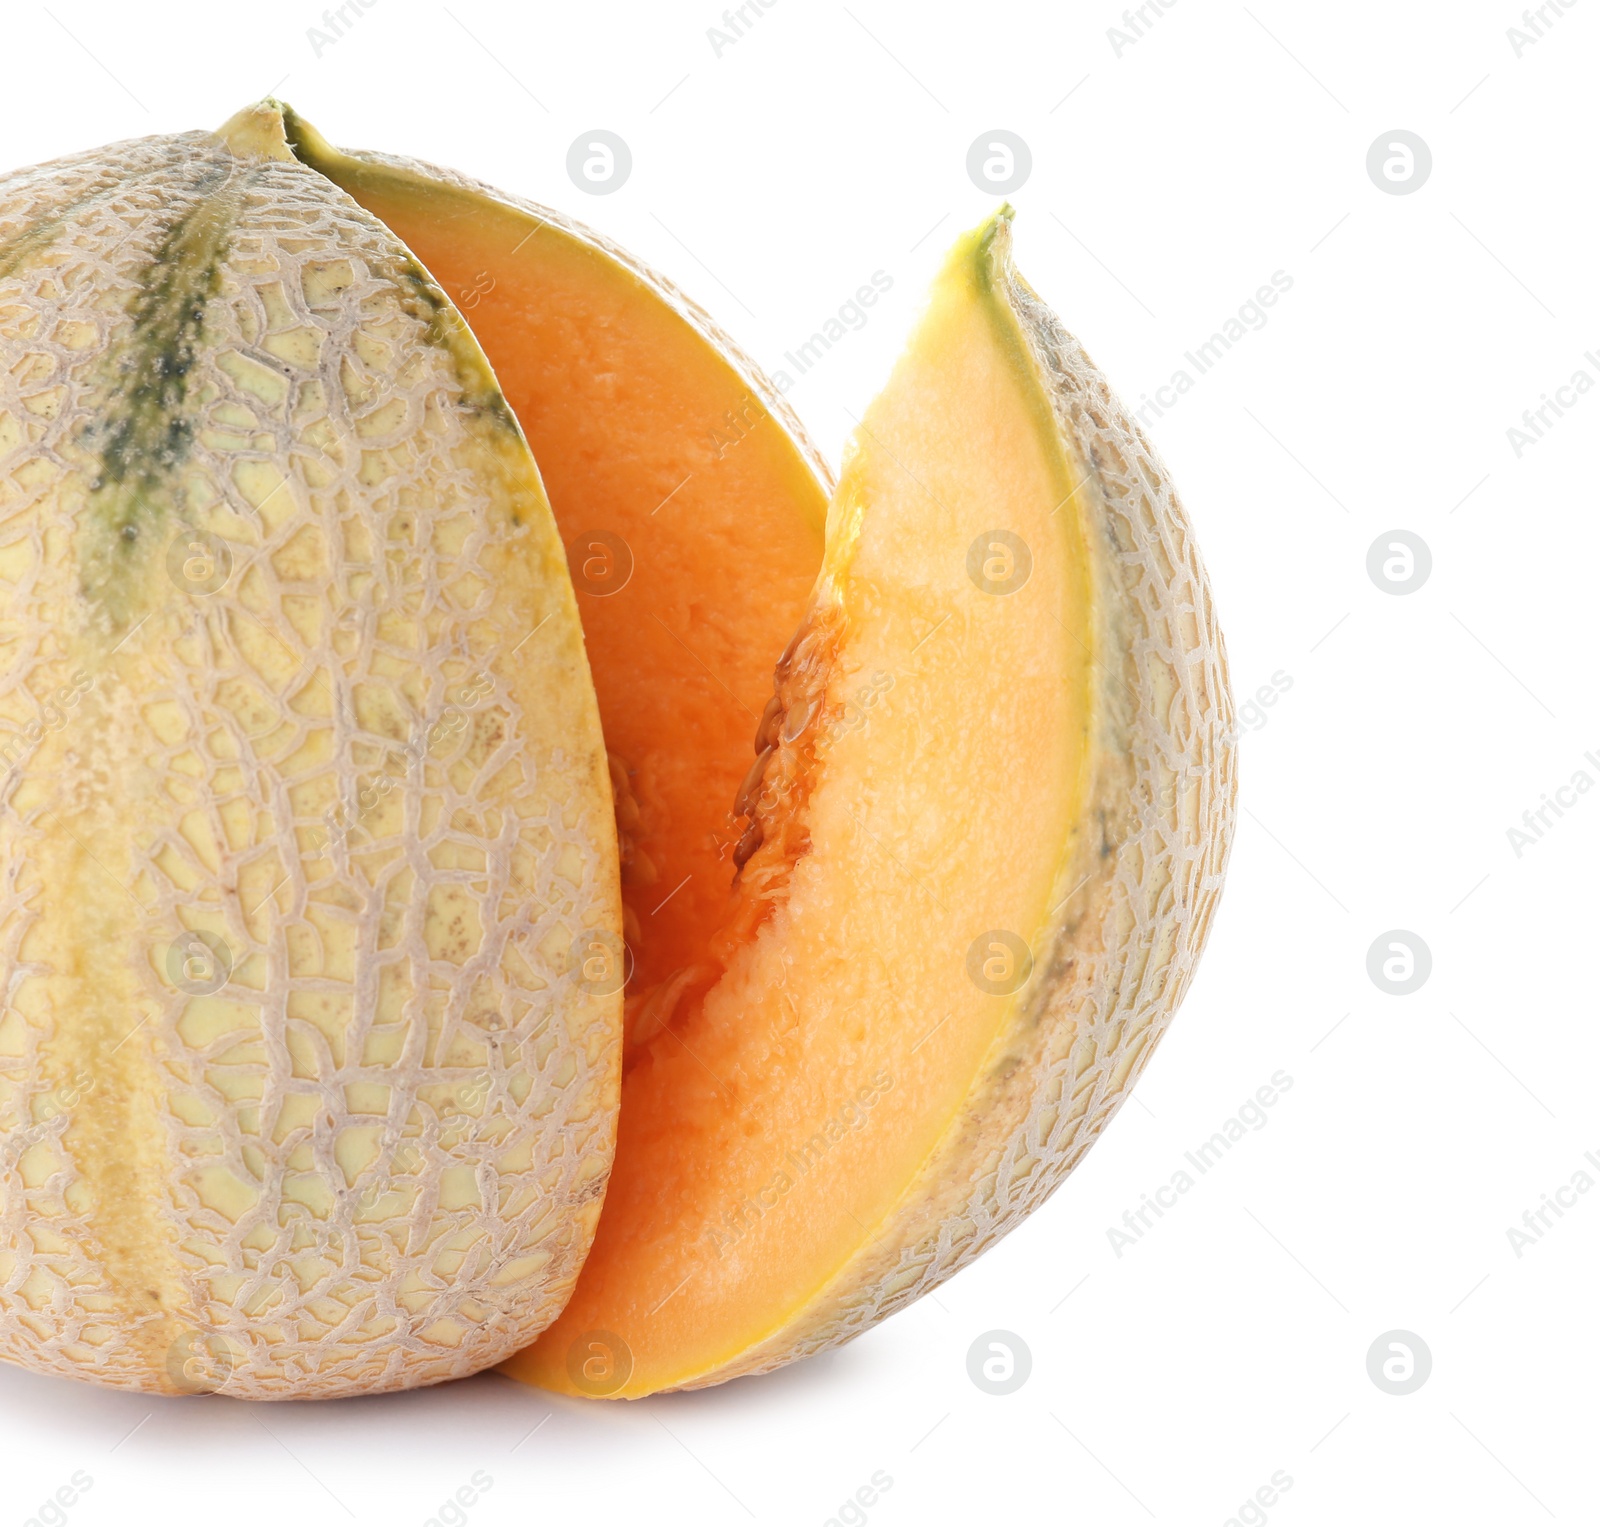 Photo of Sliced tasty ripe melon on white background